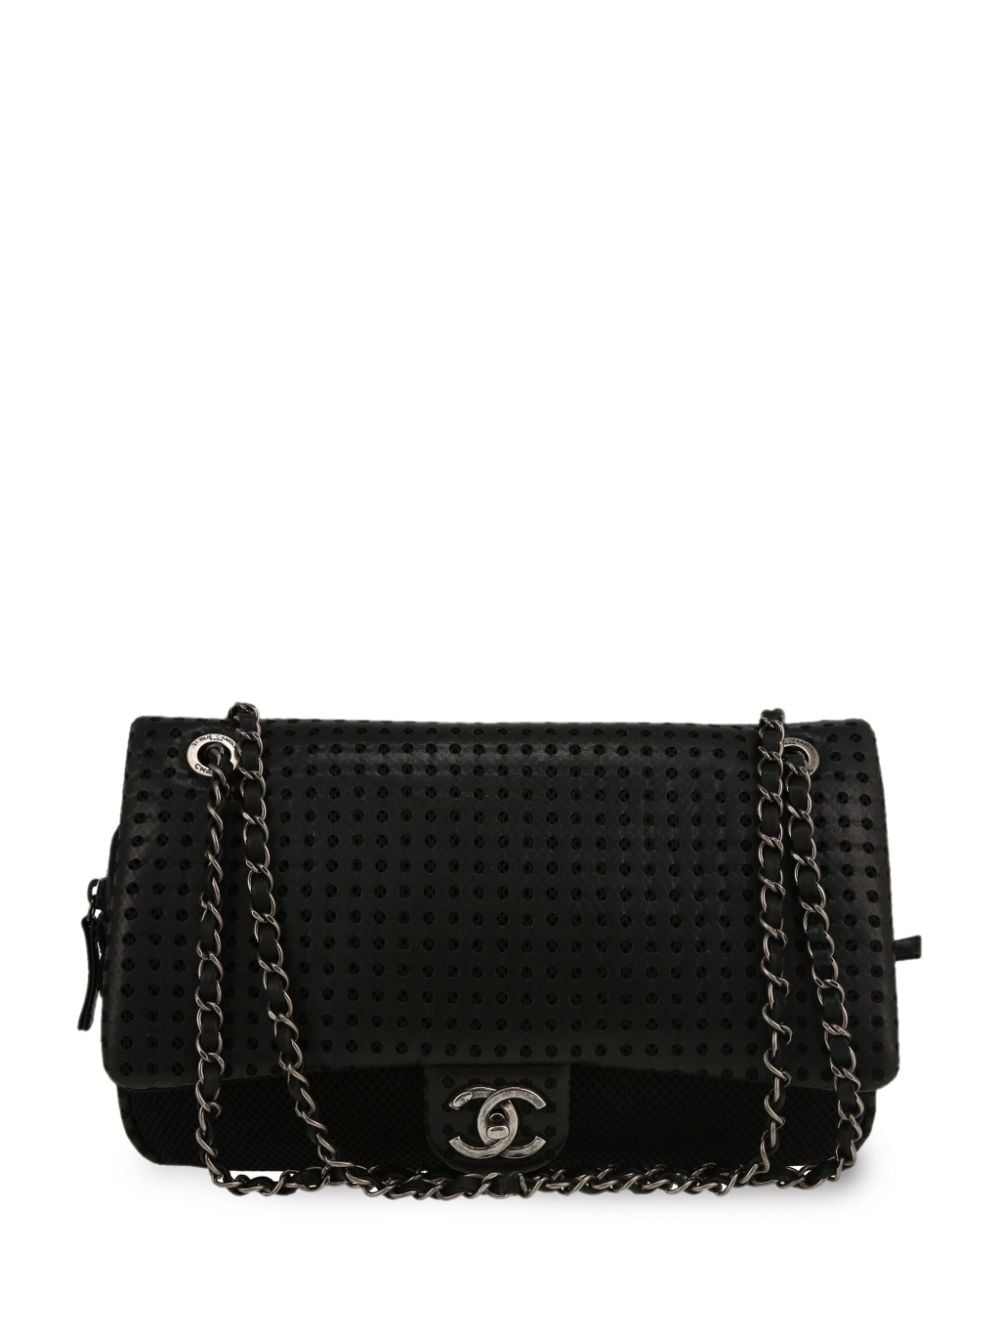 Pre-owned Chanel 2014 Double Flap Shoulder Bag In Black